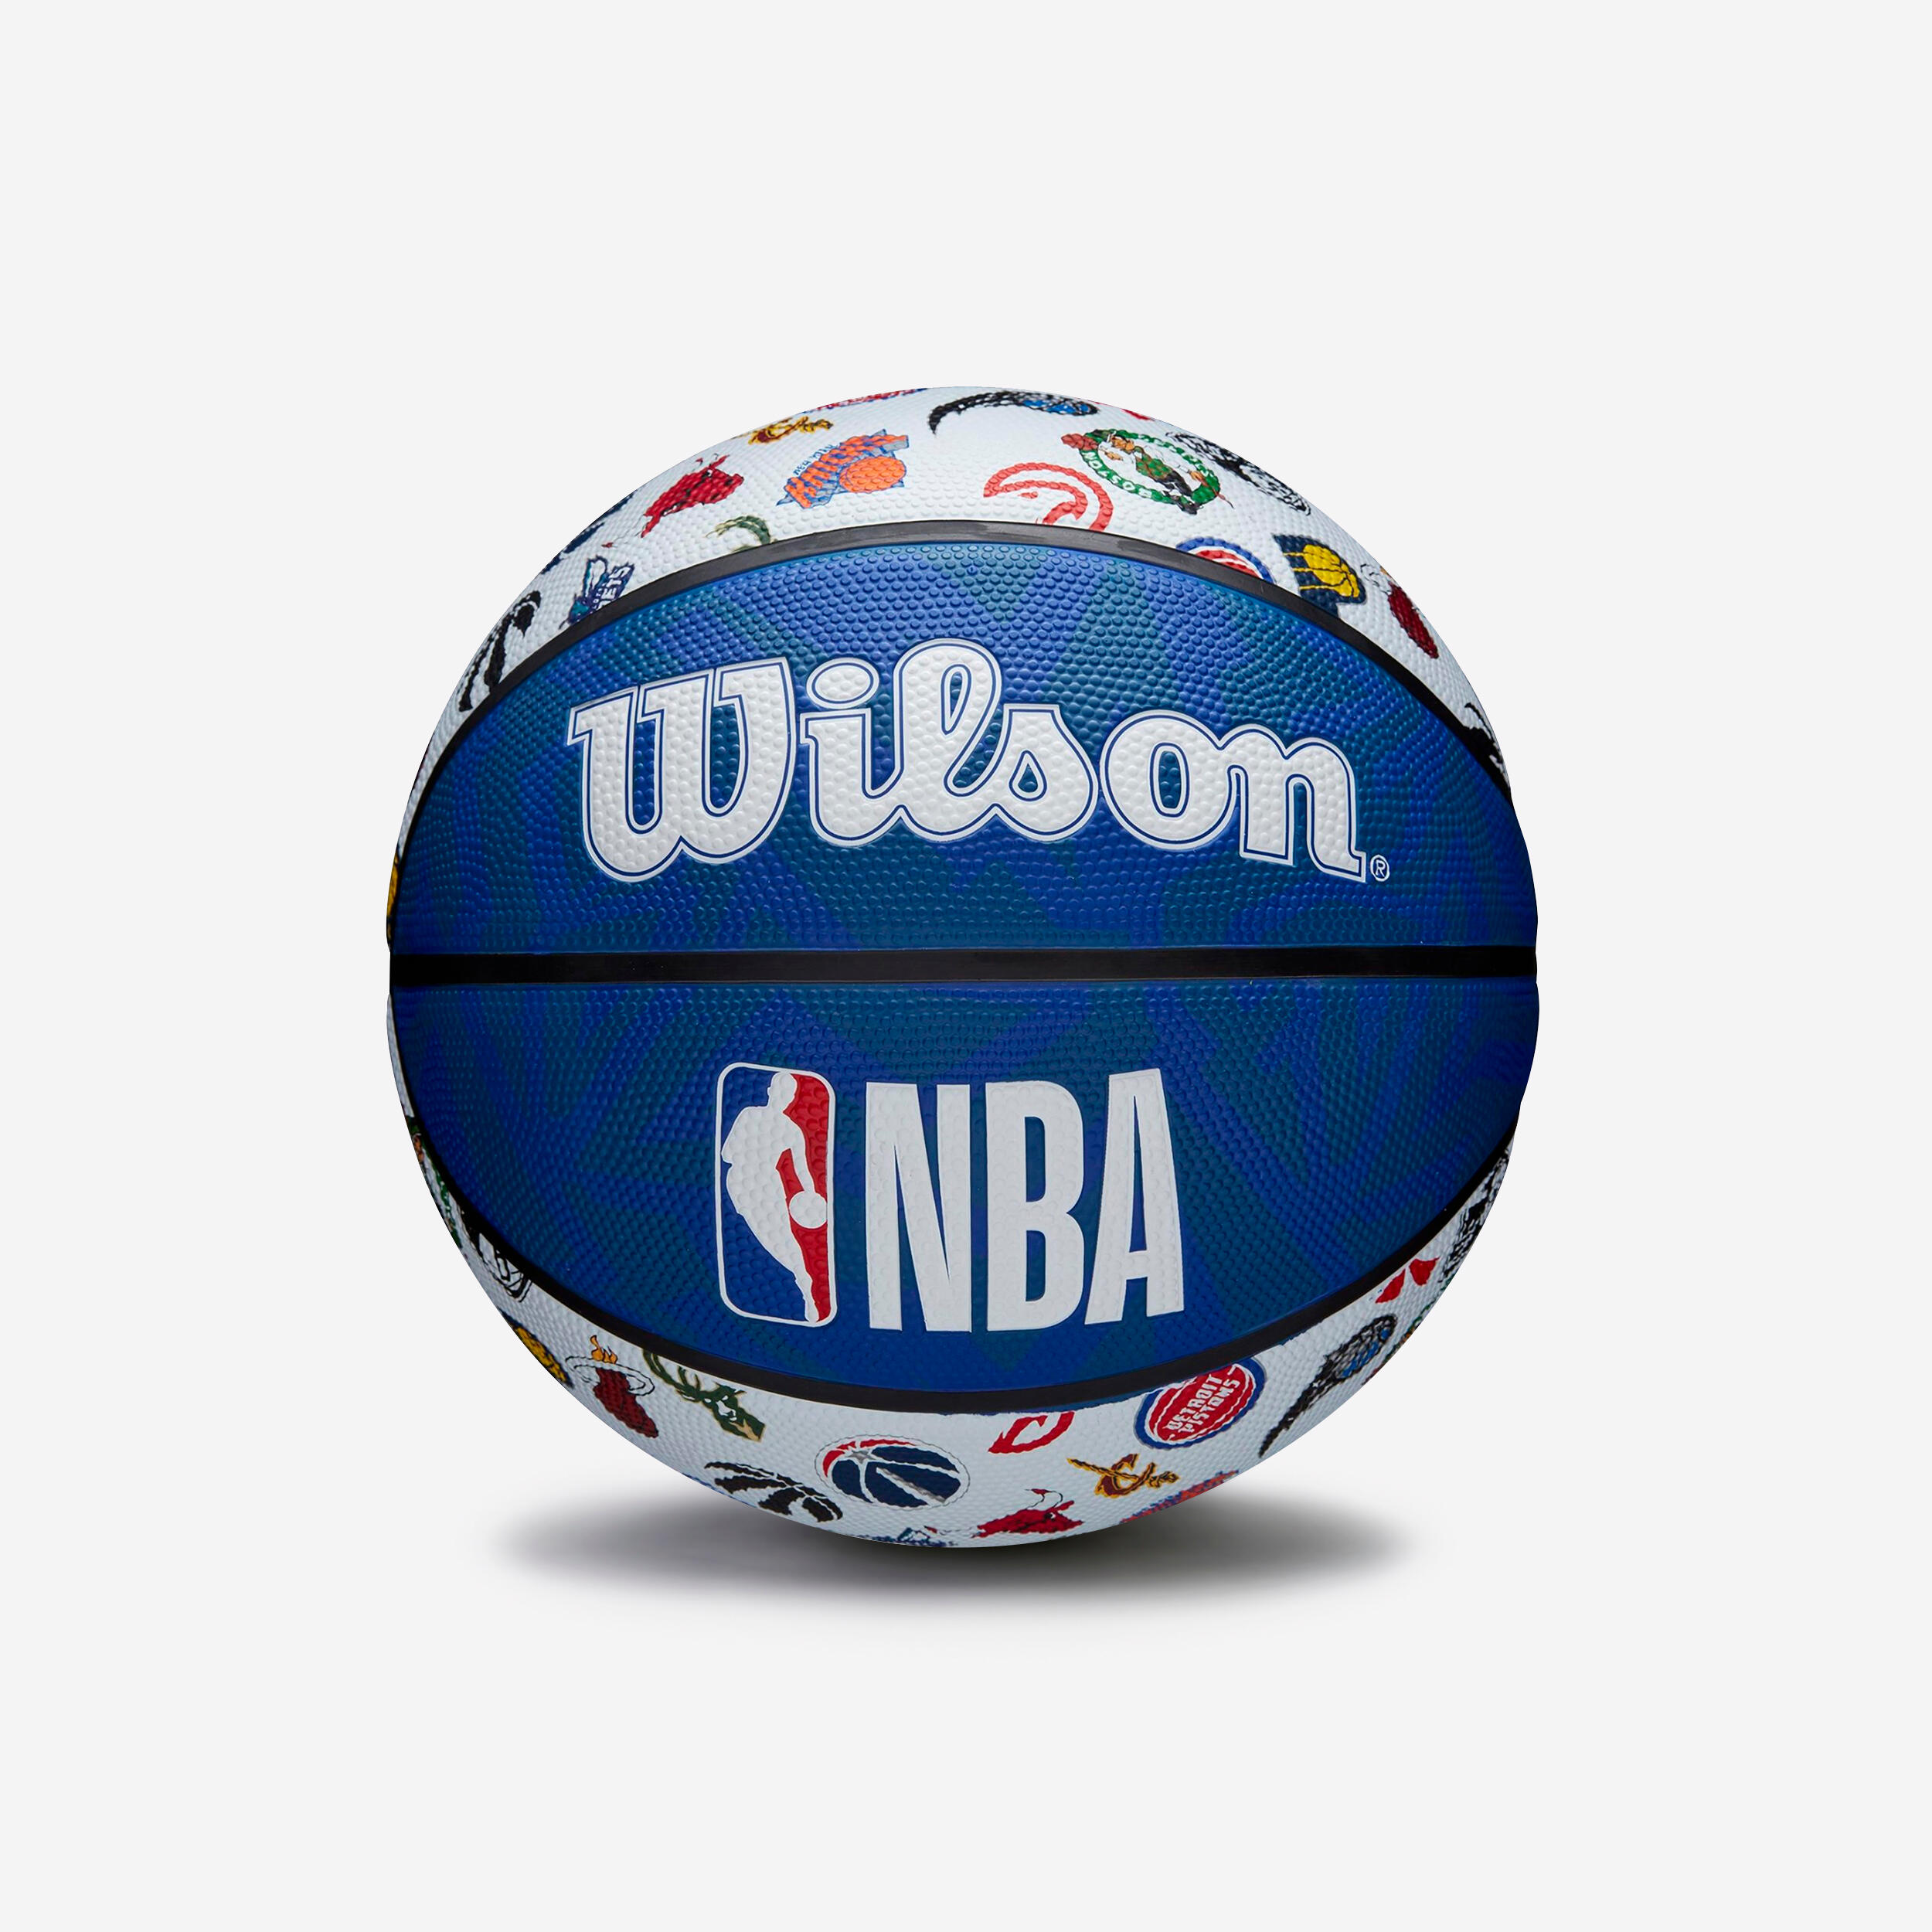 WILSON Ballon De Basketball Nba Taille 7 - Wilson Team Tribute S7 Bleu Blanc